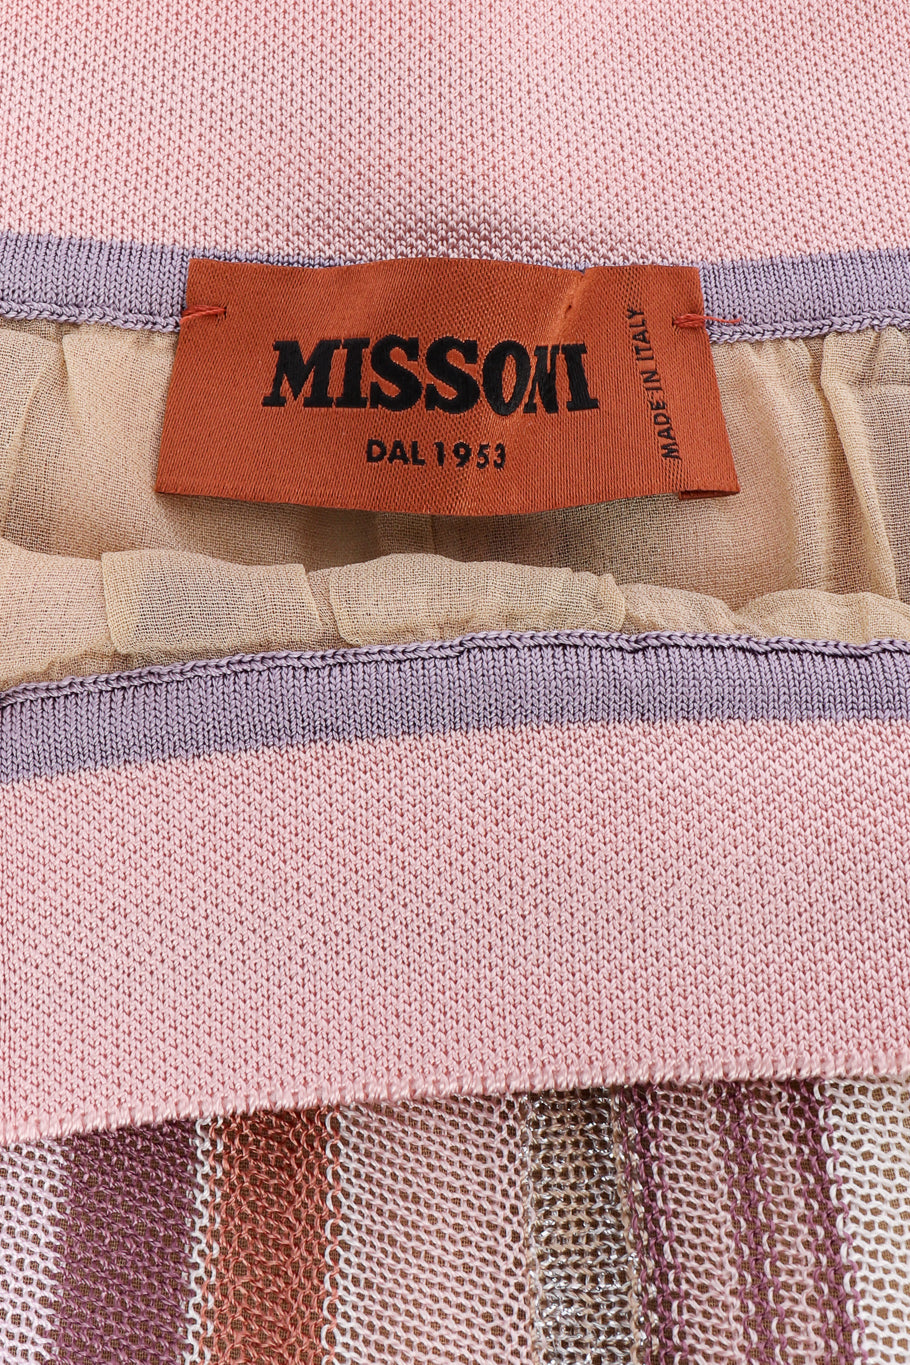 Missoni Striped Knit Duster, Tank, and Pants Set pant signature label closeup @Recessla